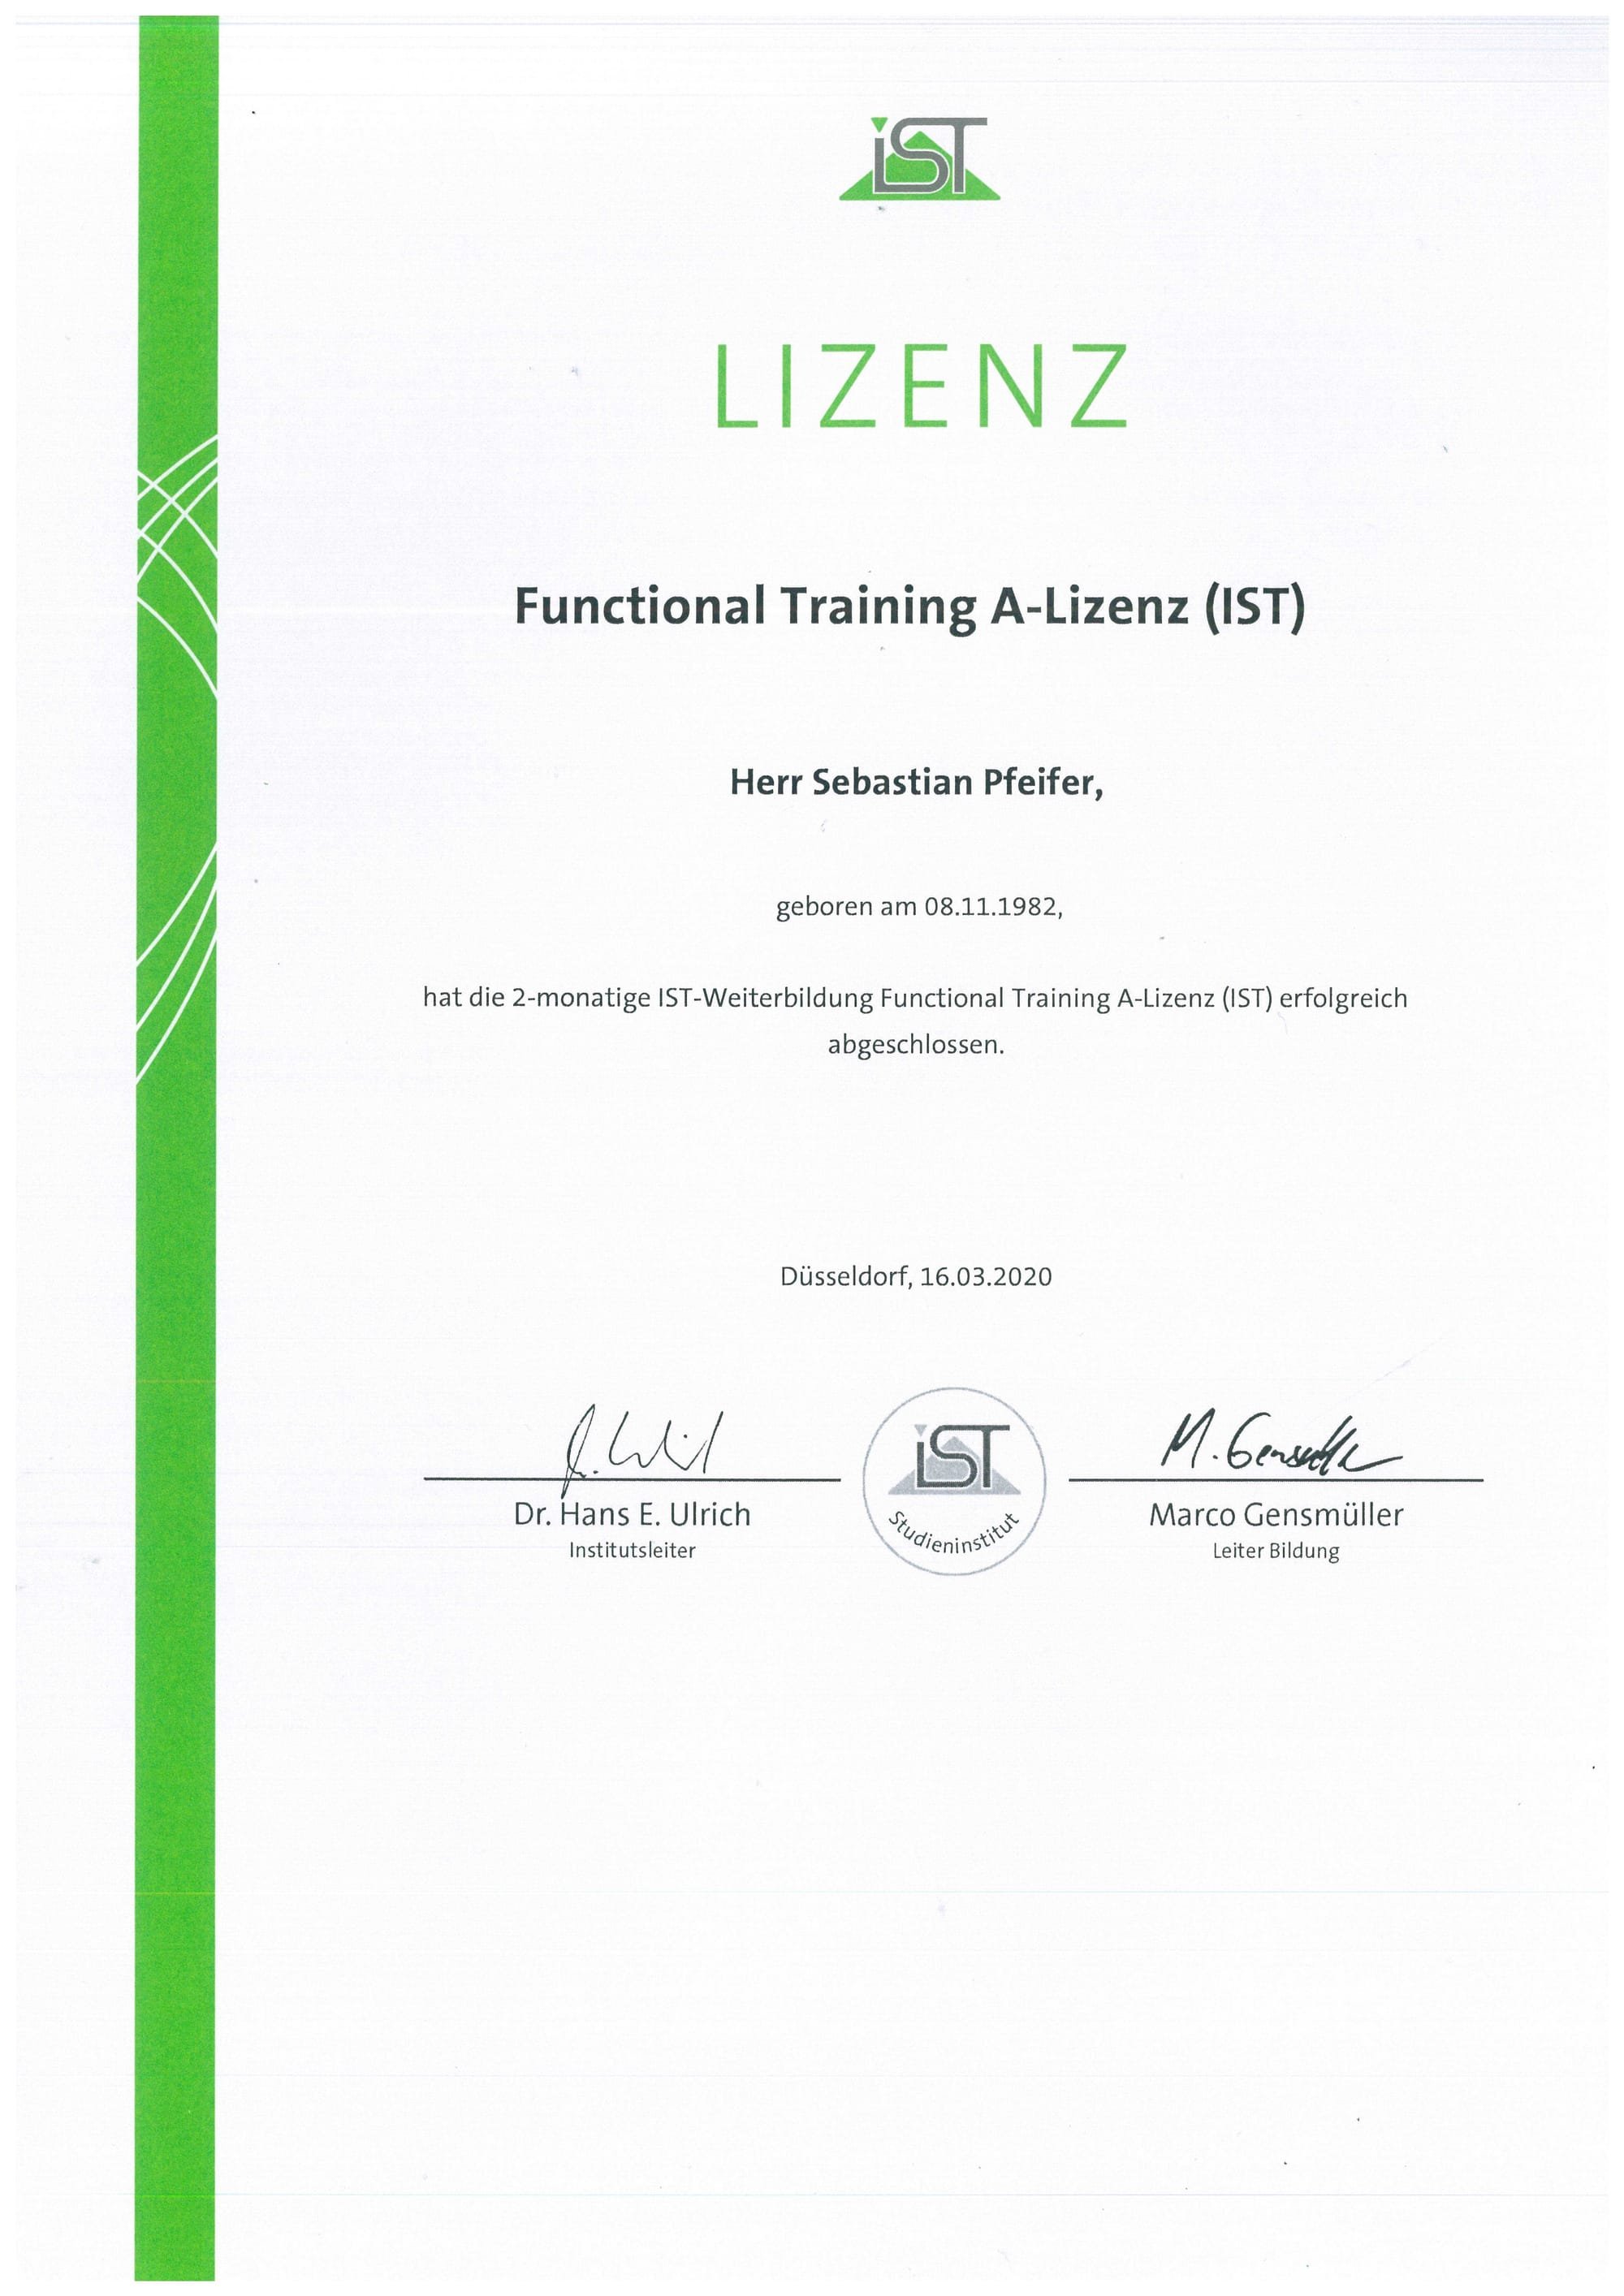 Functional Training A-Lizenz (IST)